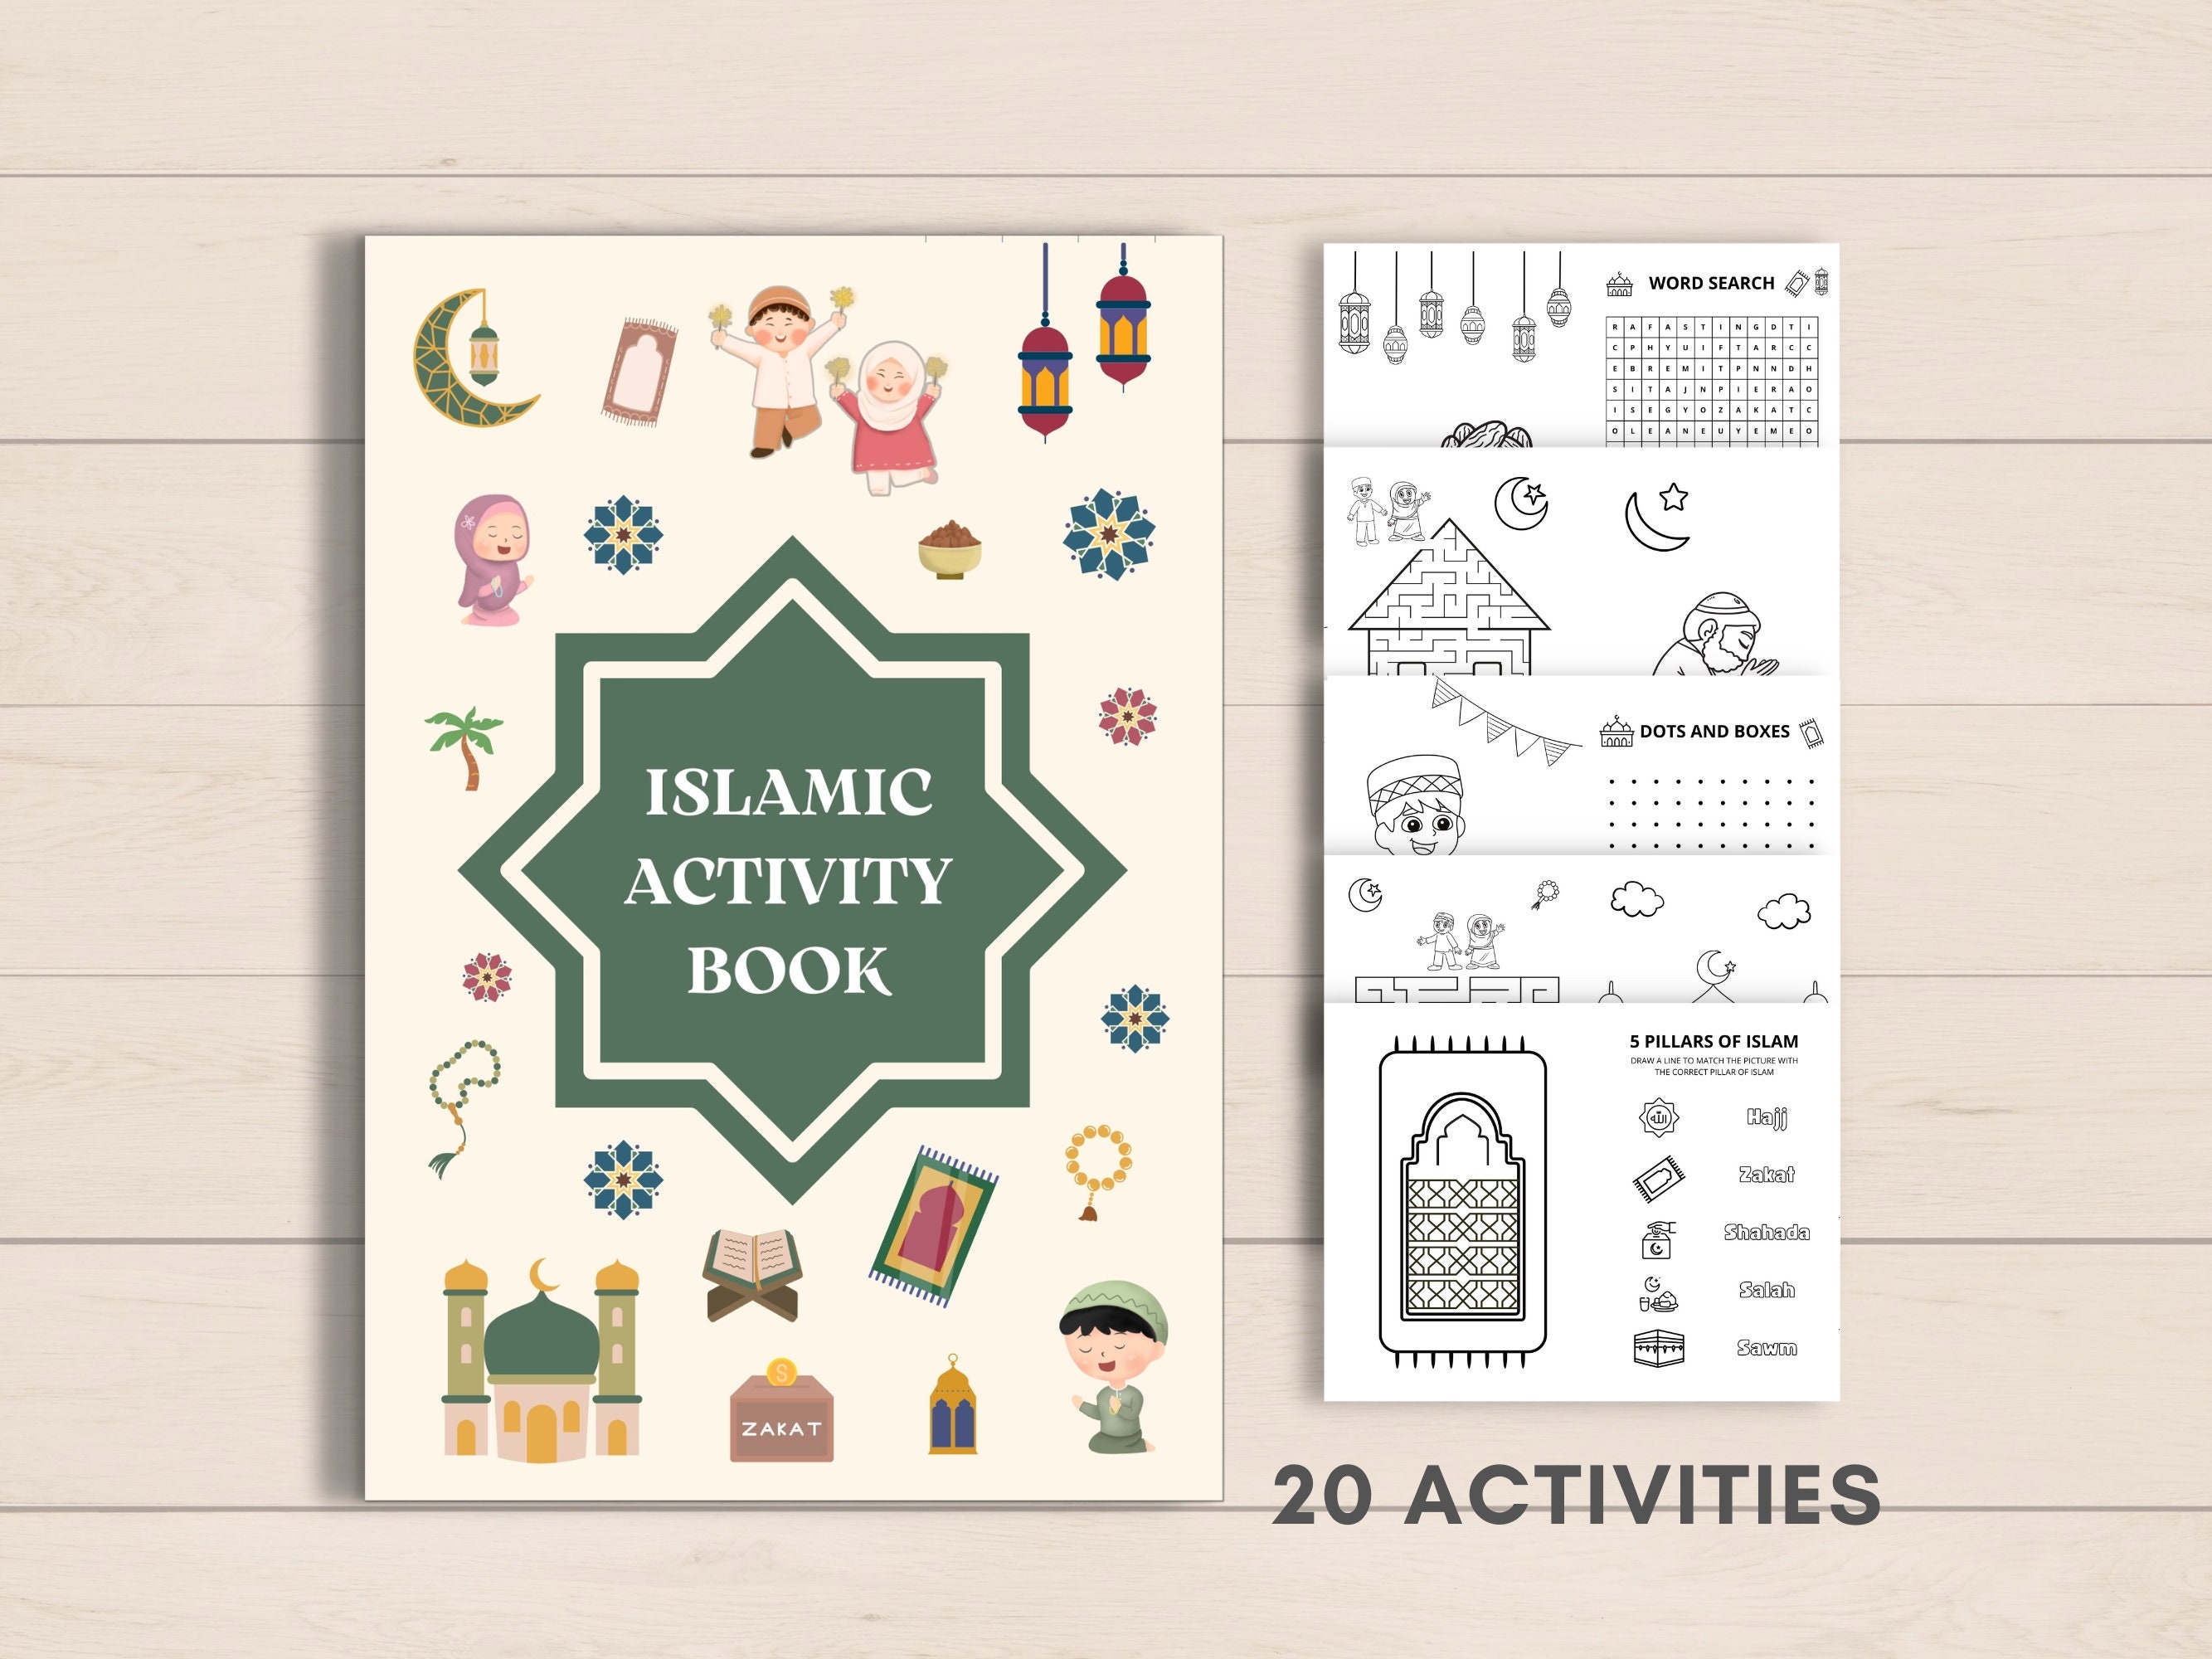 Resala Academy: The Ultimate Guide to The 5 pillars of Islam - Resala  Academy